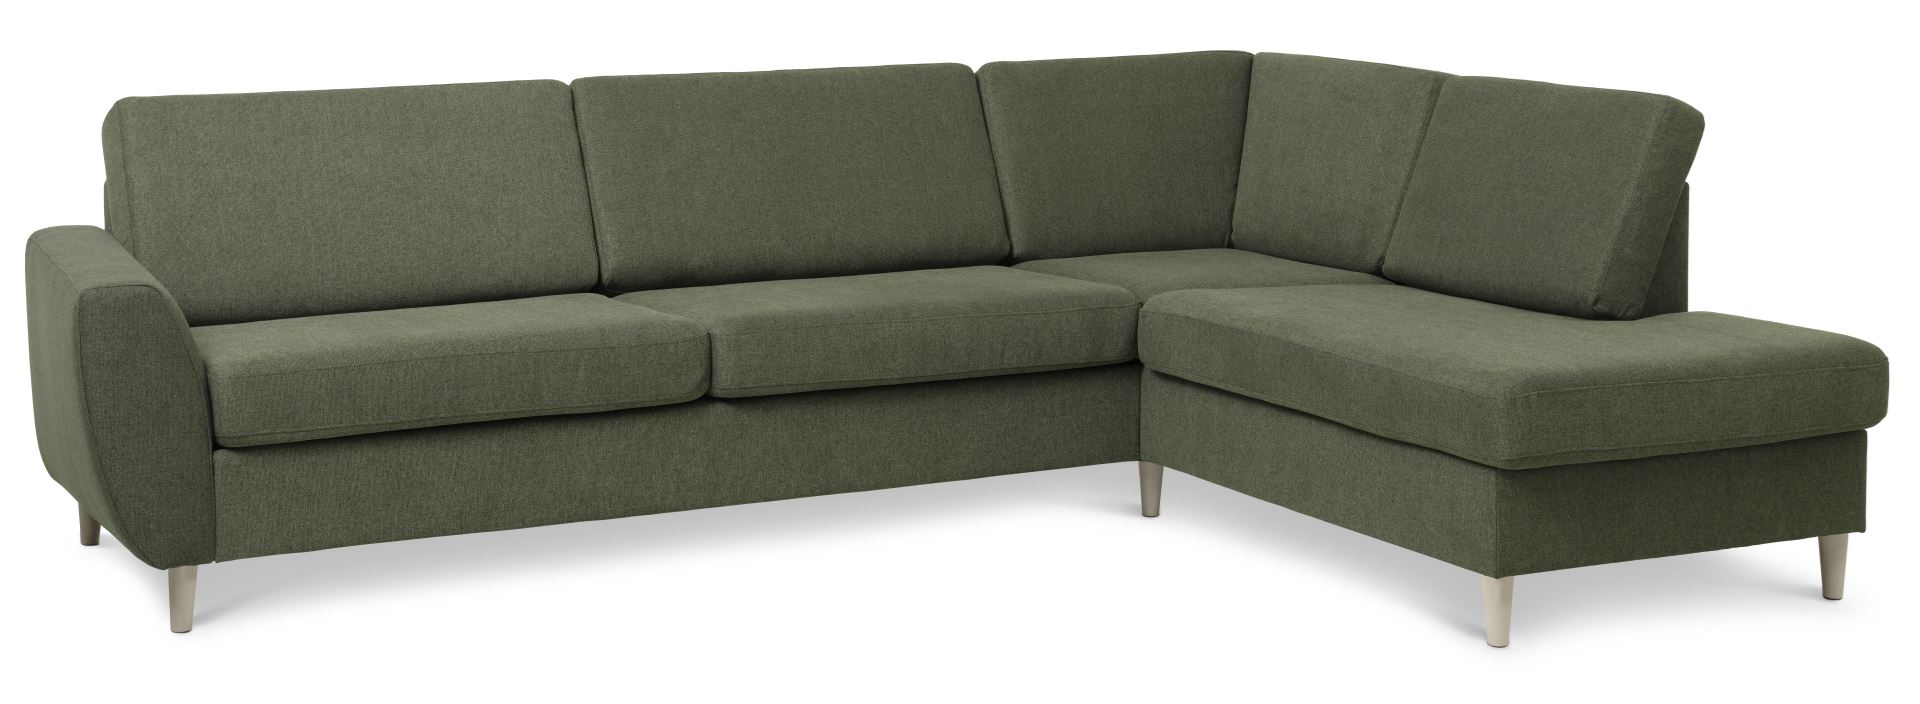 Wendy set 3 OE right sofa, m. chaiselong - vinter mosgrøn polyester stof og natur træ